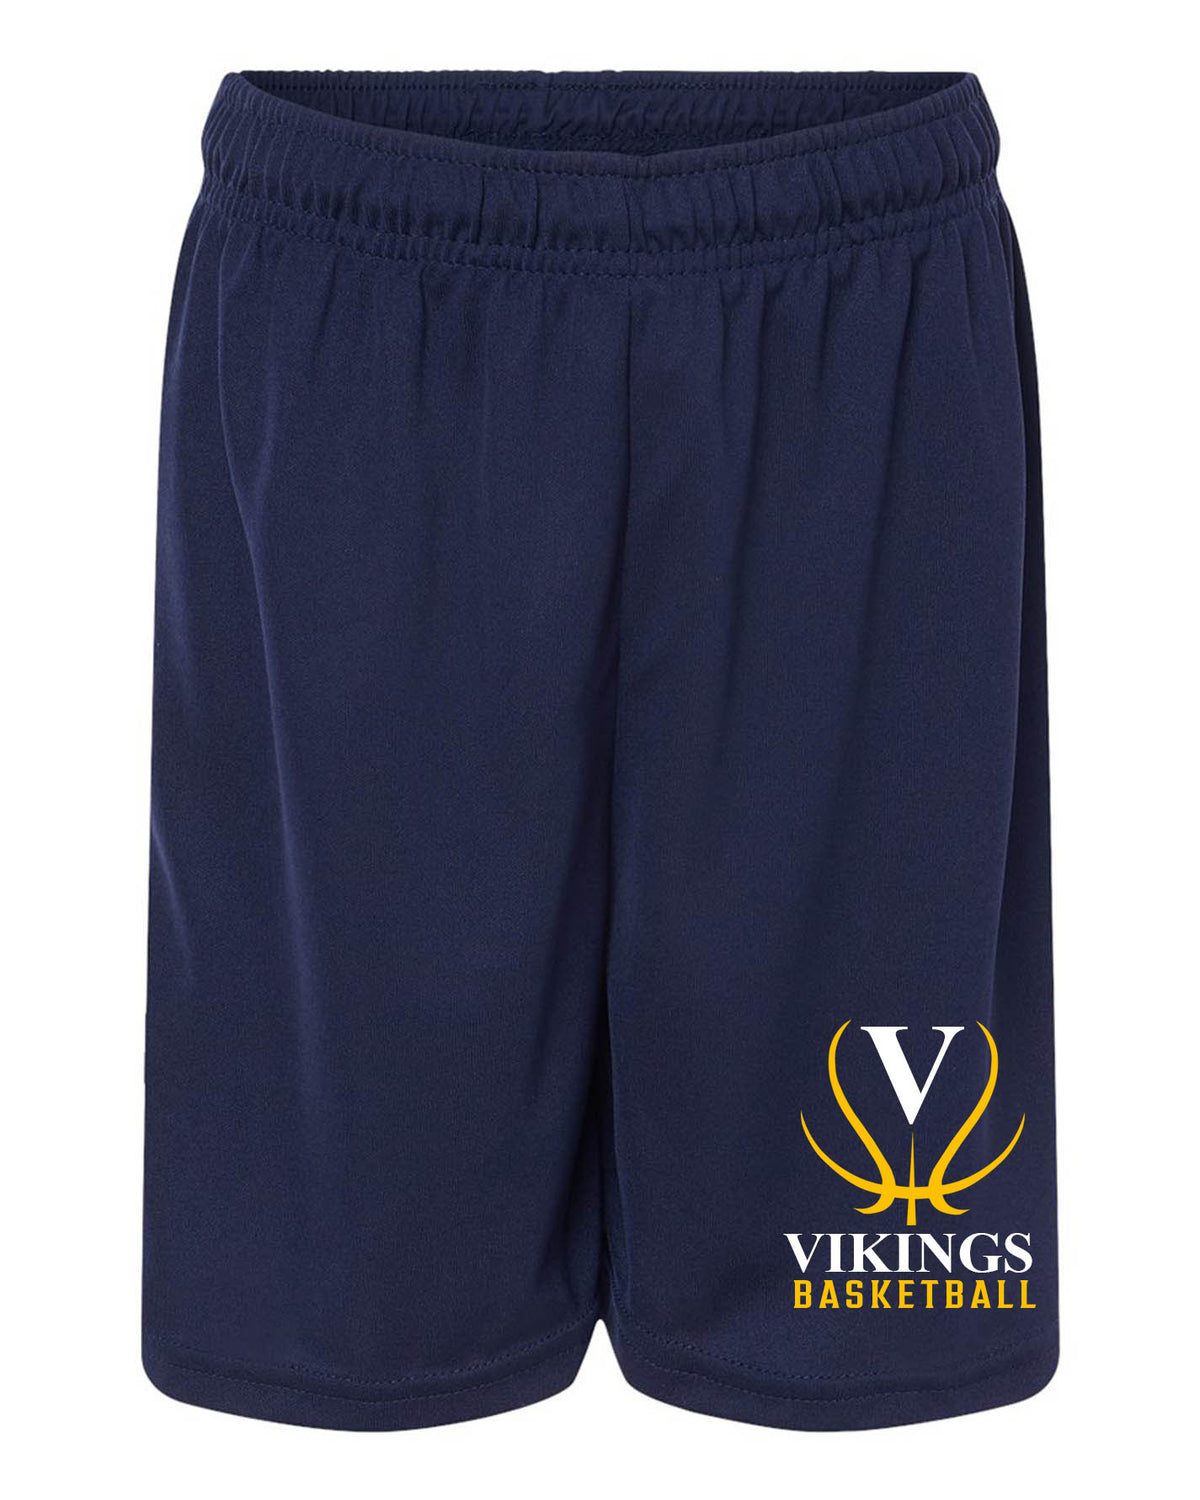 Vikings Basketball Performance Shorts Design 3